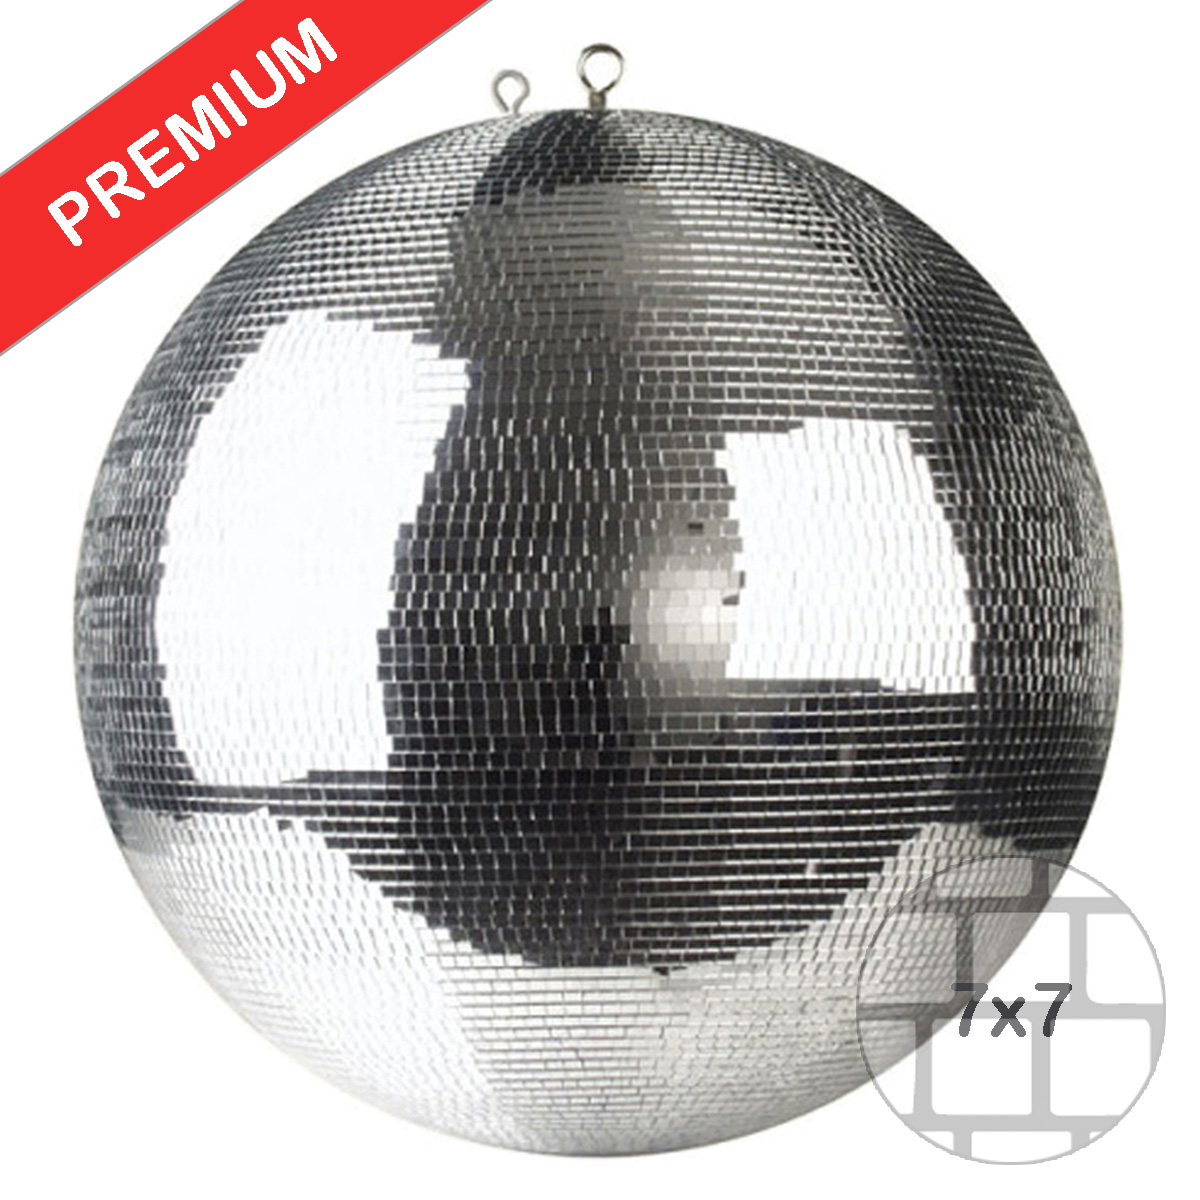 Spiegelkugel 75cm silber chrom- Diskokugel (Discokugel) Party Lichteffekt - Echtglas - mirrorball safety silver chrome color